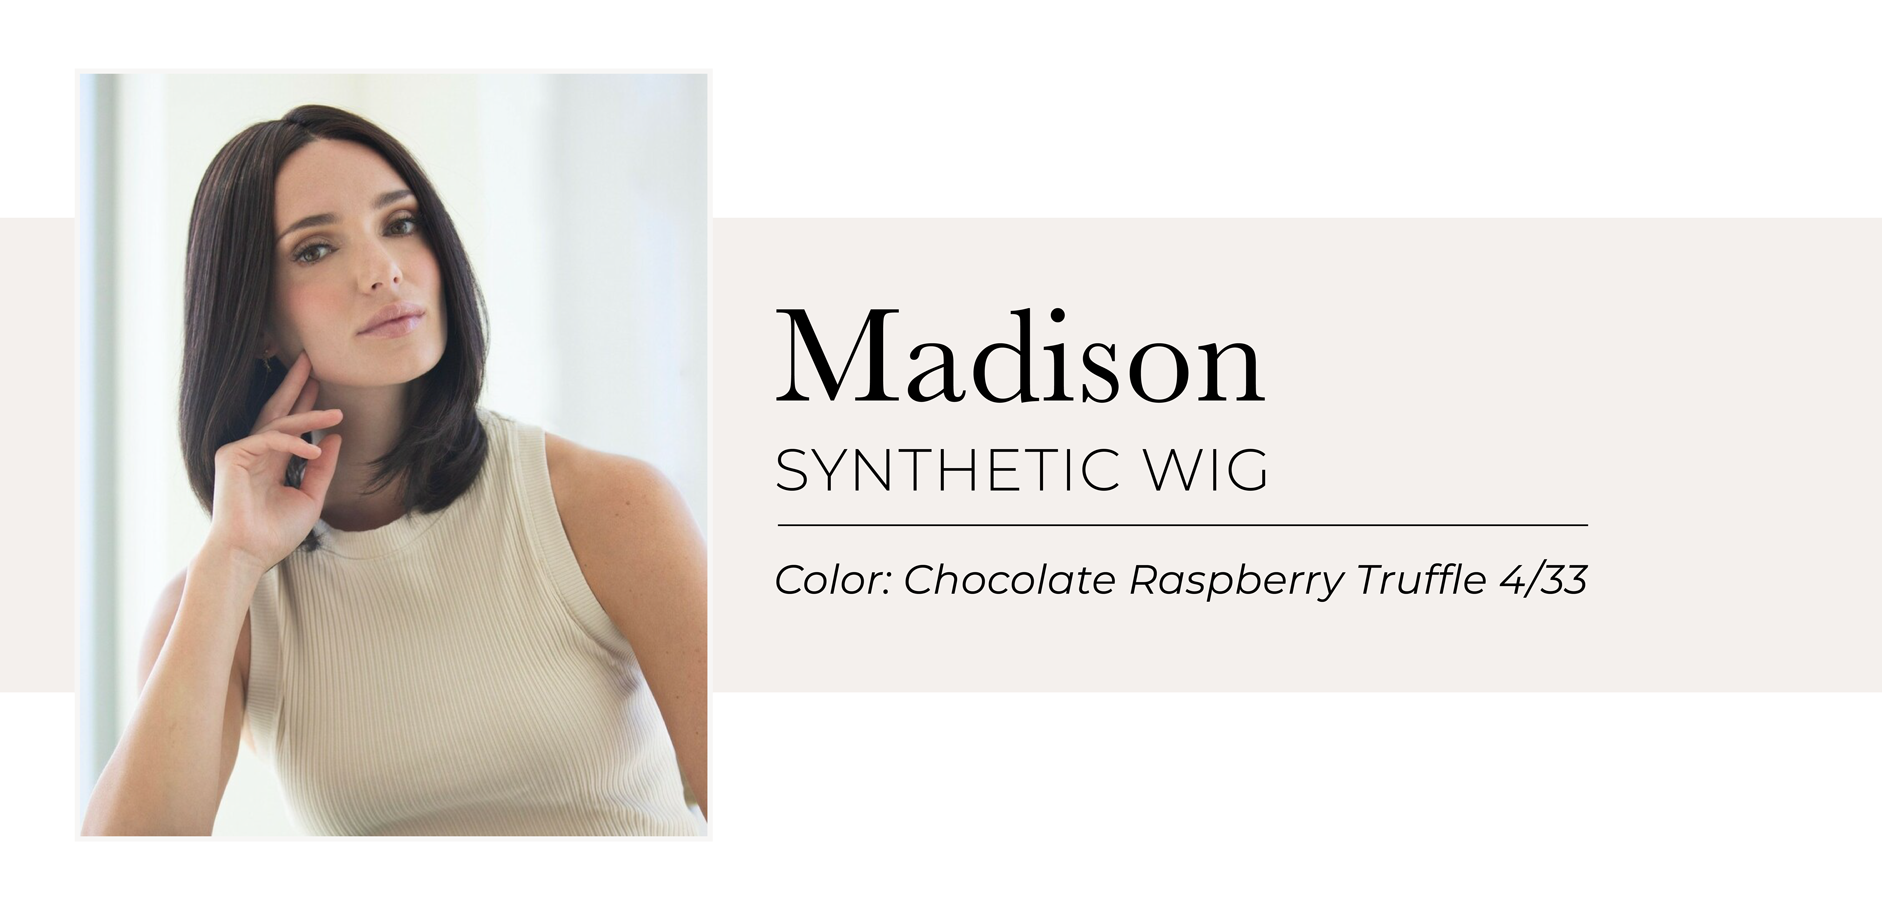 Madison synthetic wig